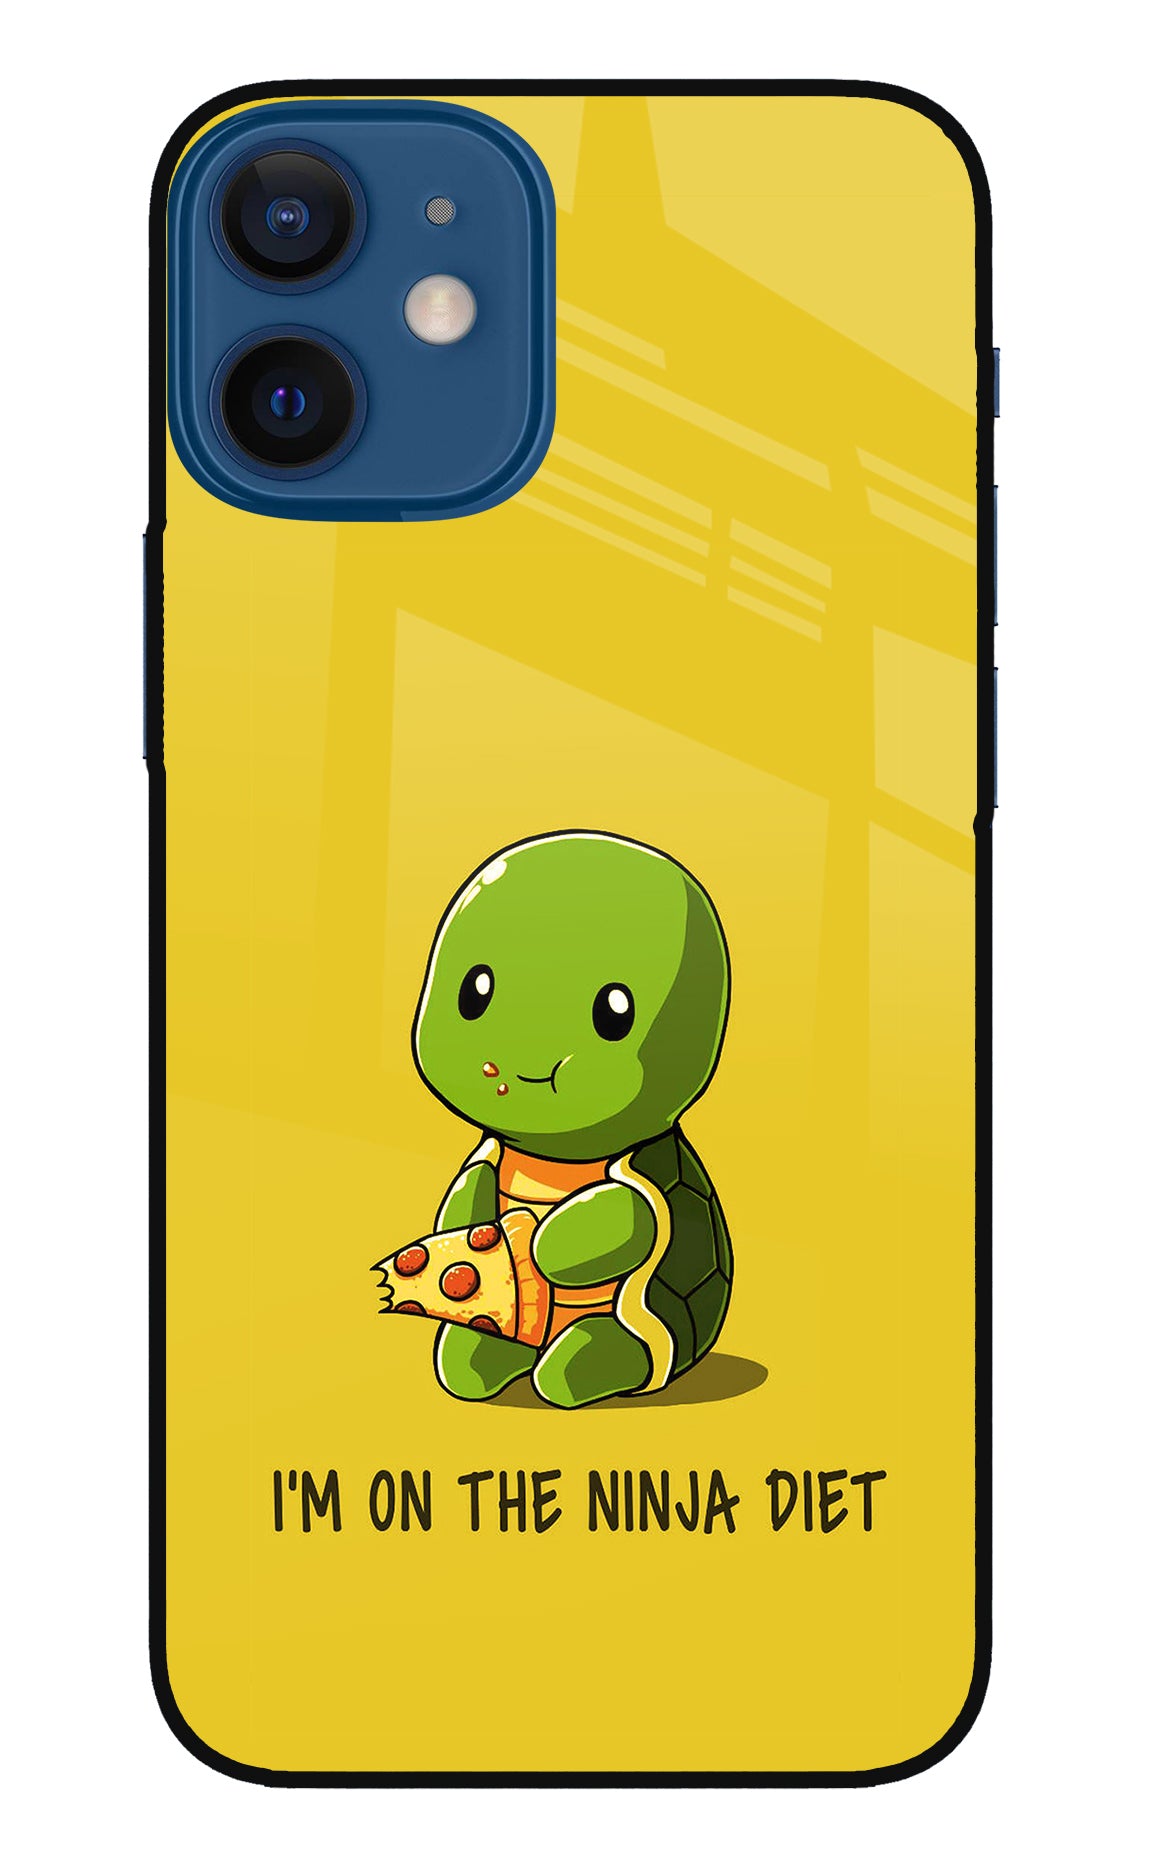 I'm on Ninja Diet iPhone 12 Mini Back Cover